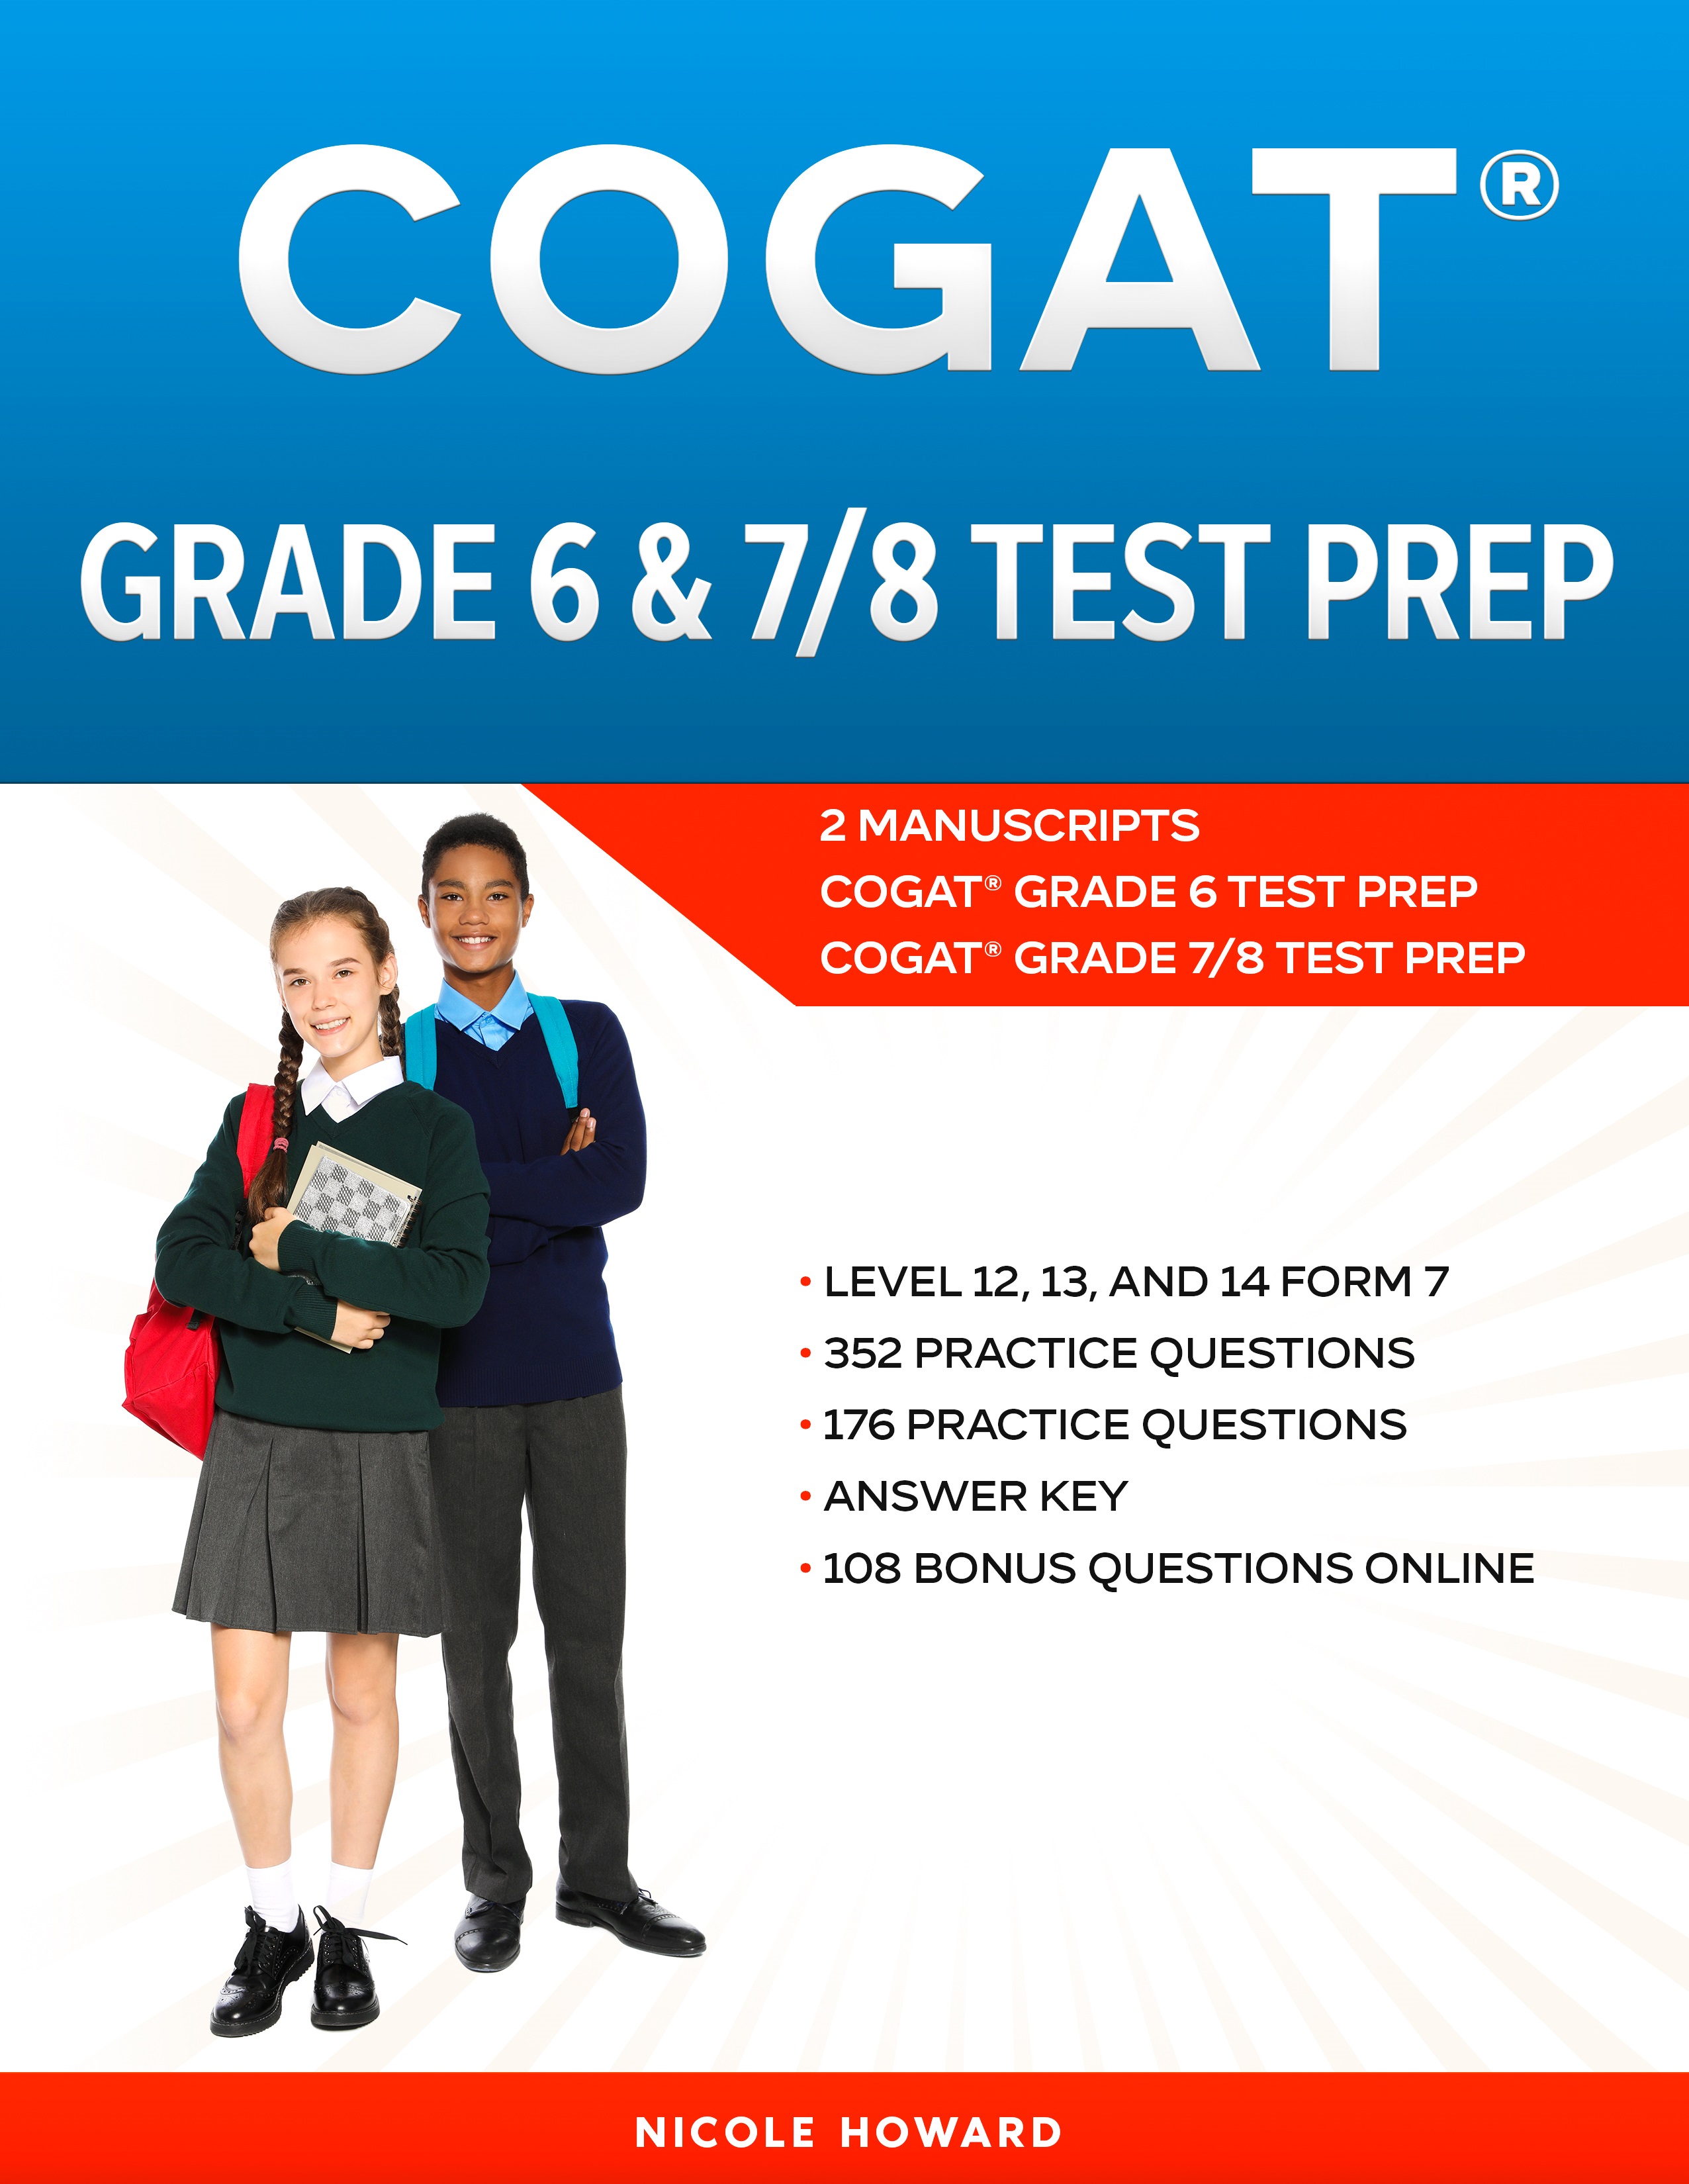 COGAT GRADE 6 AND 7/8 TEST PREP